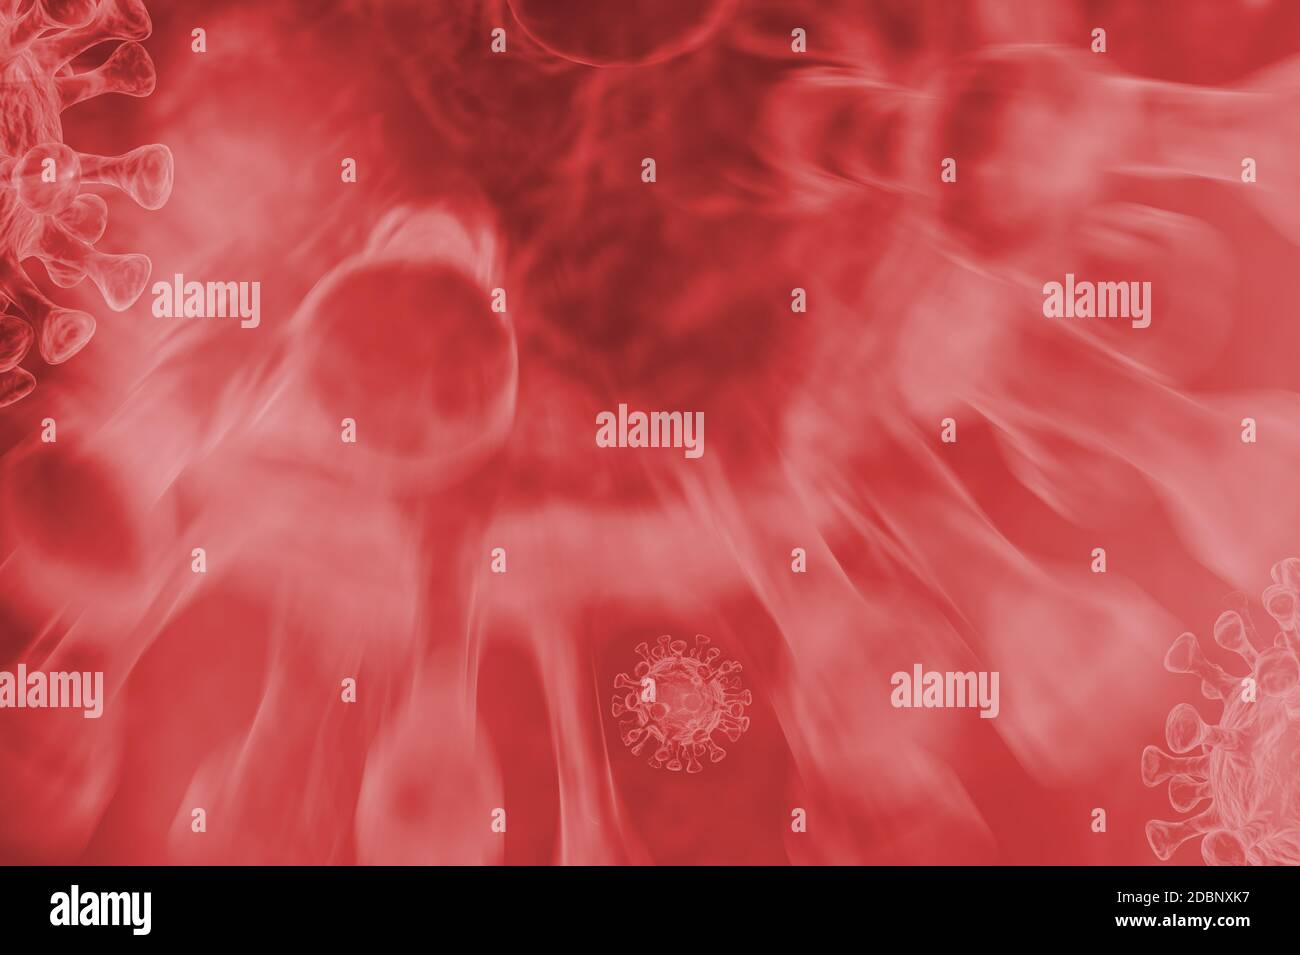 Bakterien, Zellen 3D-rendering auf rotem Hintergrund. Coronavirus 2019-nCov neuartiges Coronavirus-Konzept. bew viren mit unschärfe. Carta da parati mikrobe Foto Stock